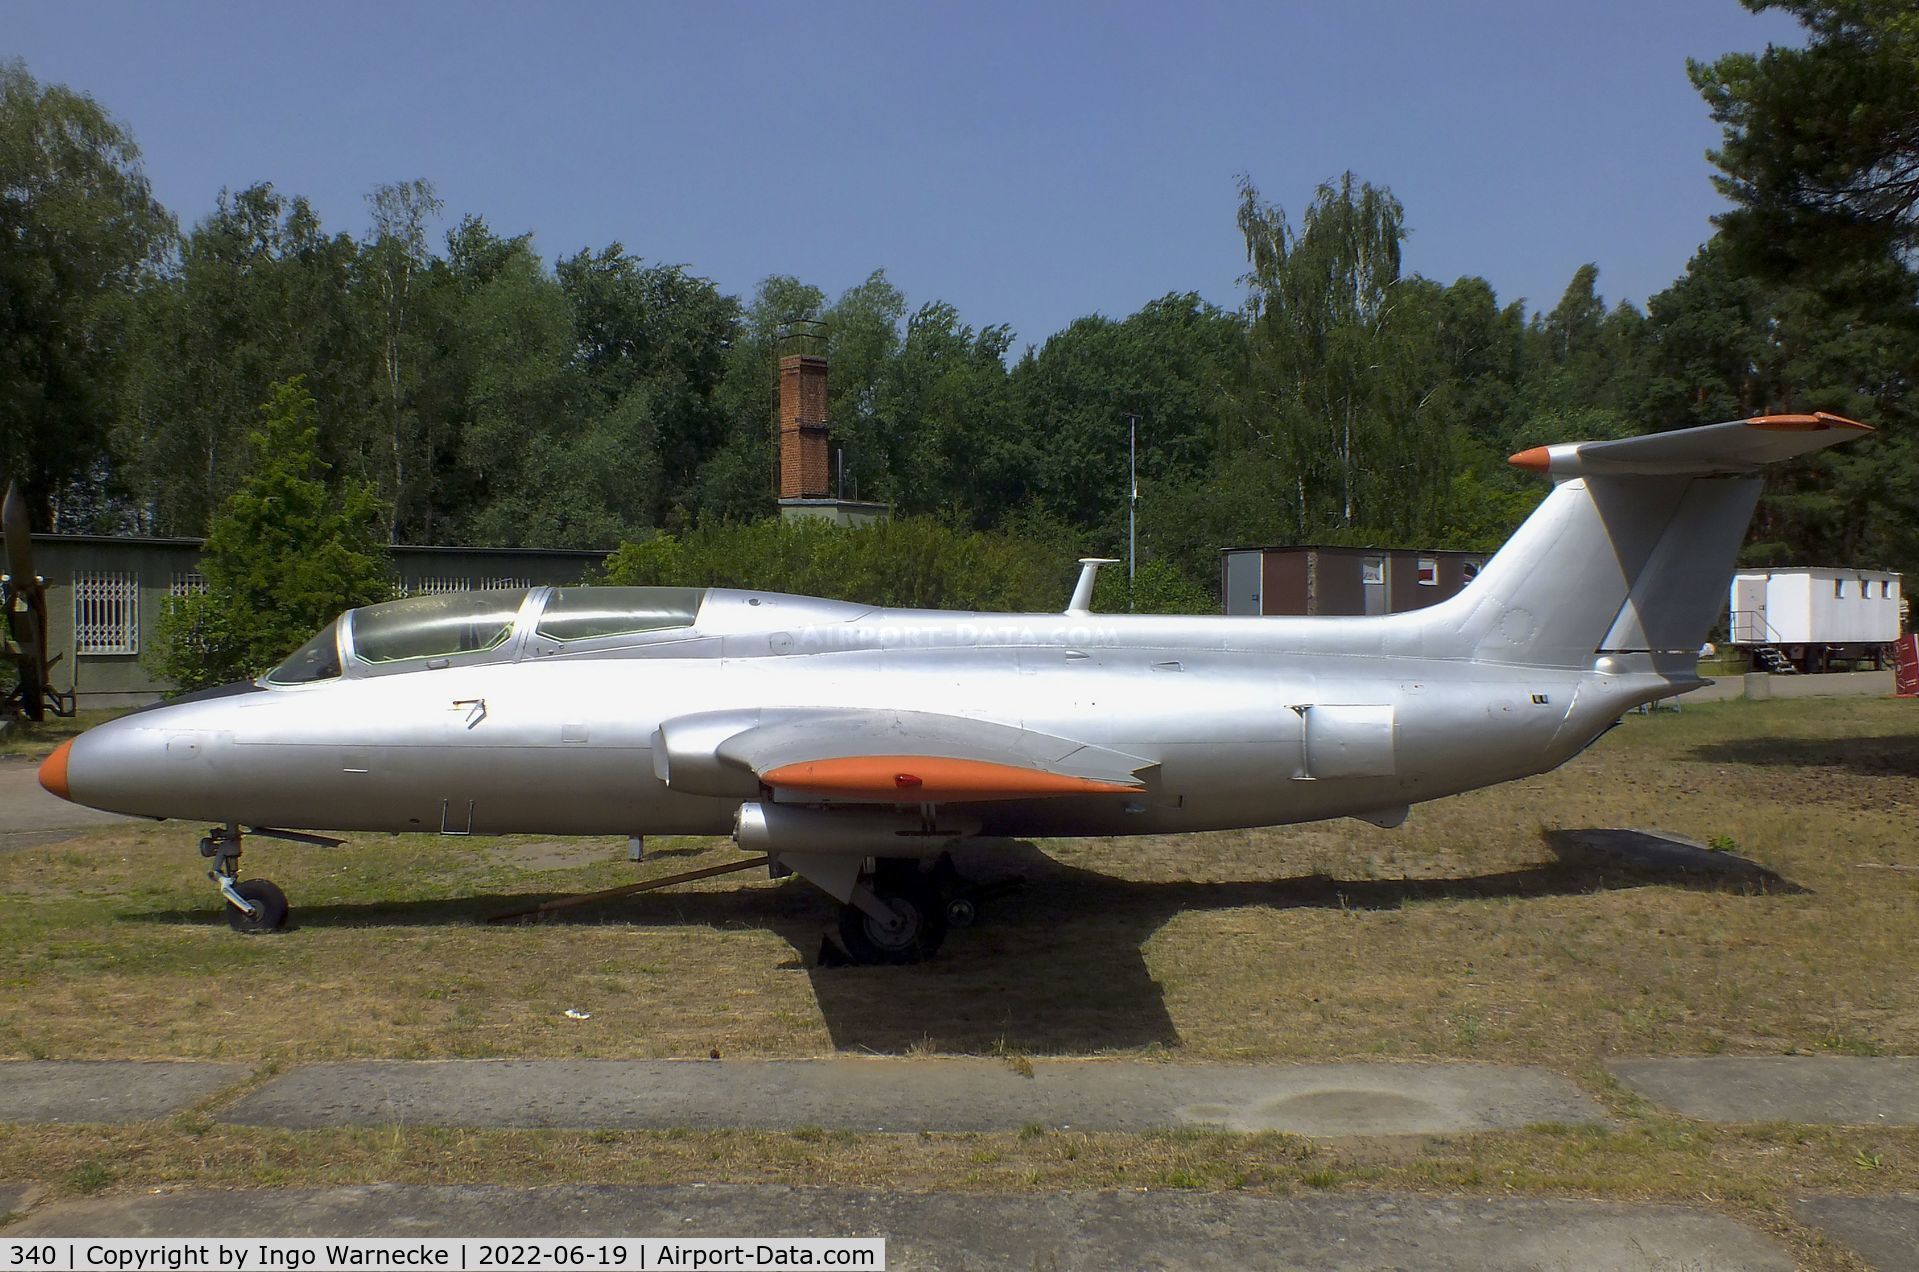 340, 1965 Aero L-29 Delfin C/N 591526, Aero L-29 Delfin MAYA at the Luftfahrtmuseum Finowfurt